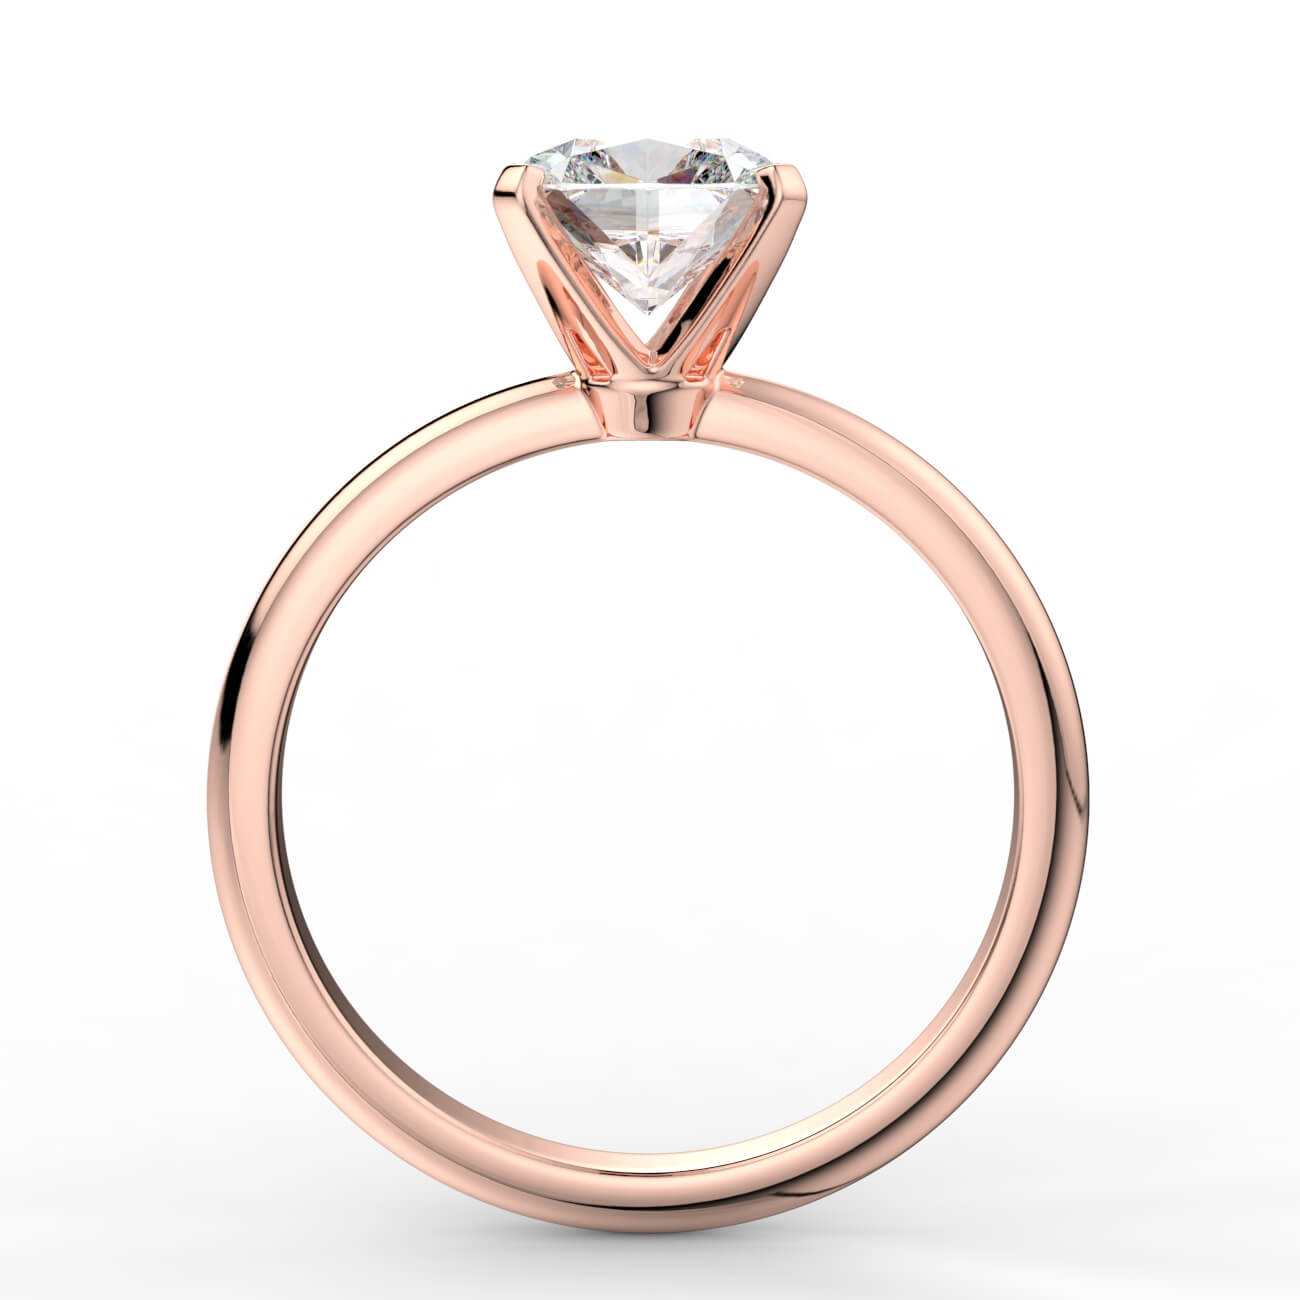 Knife-edge solitaire cushion cut diamond engagement ring in rose gold – Australian Diamond Network